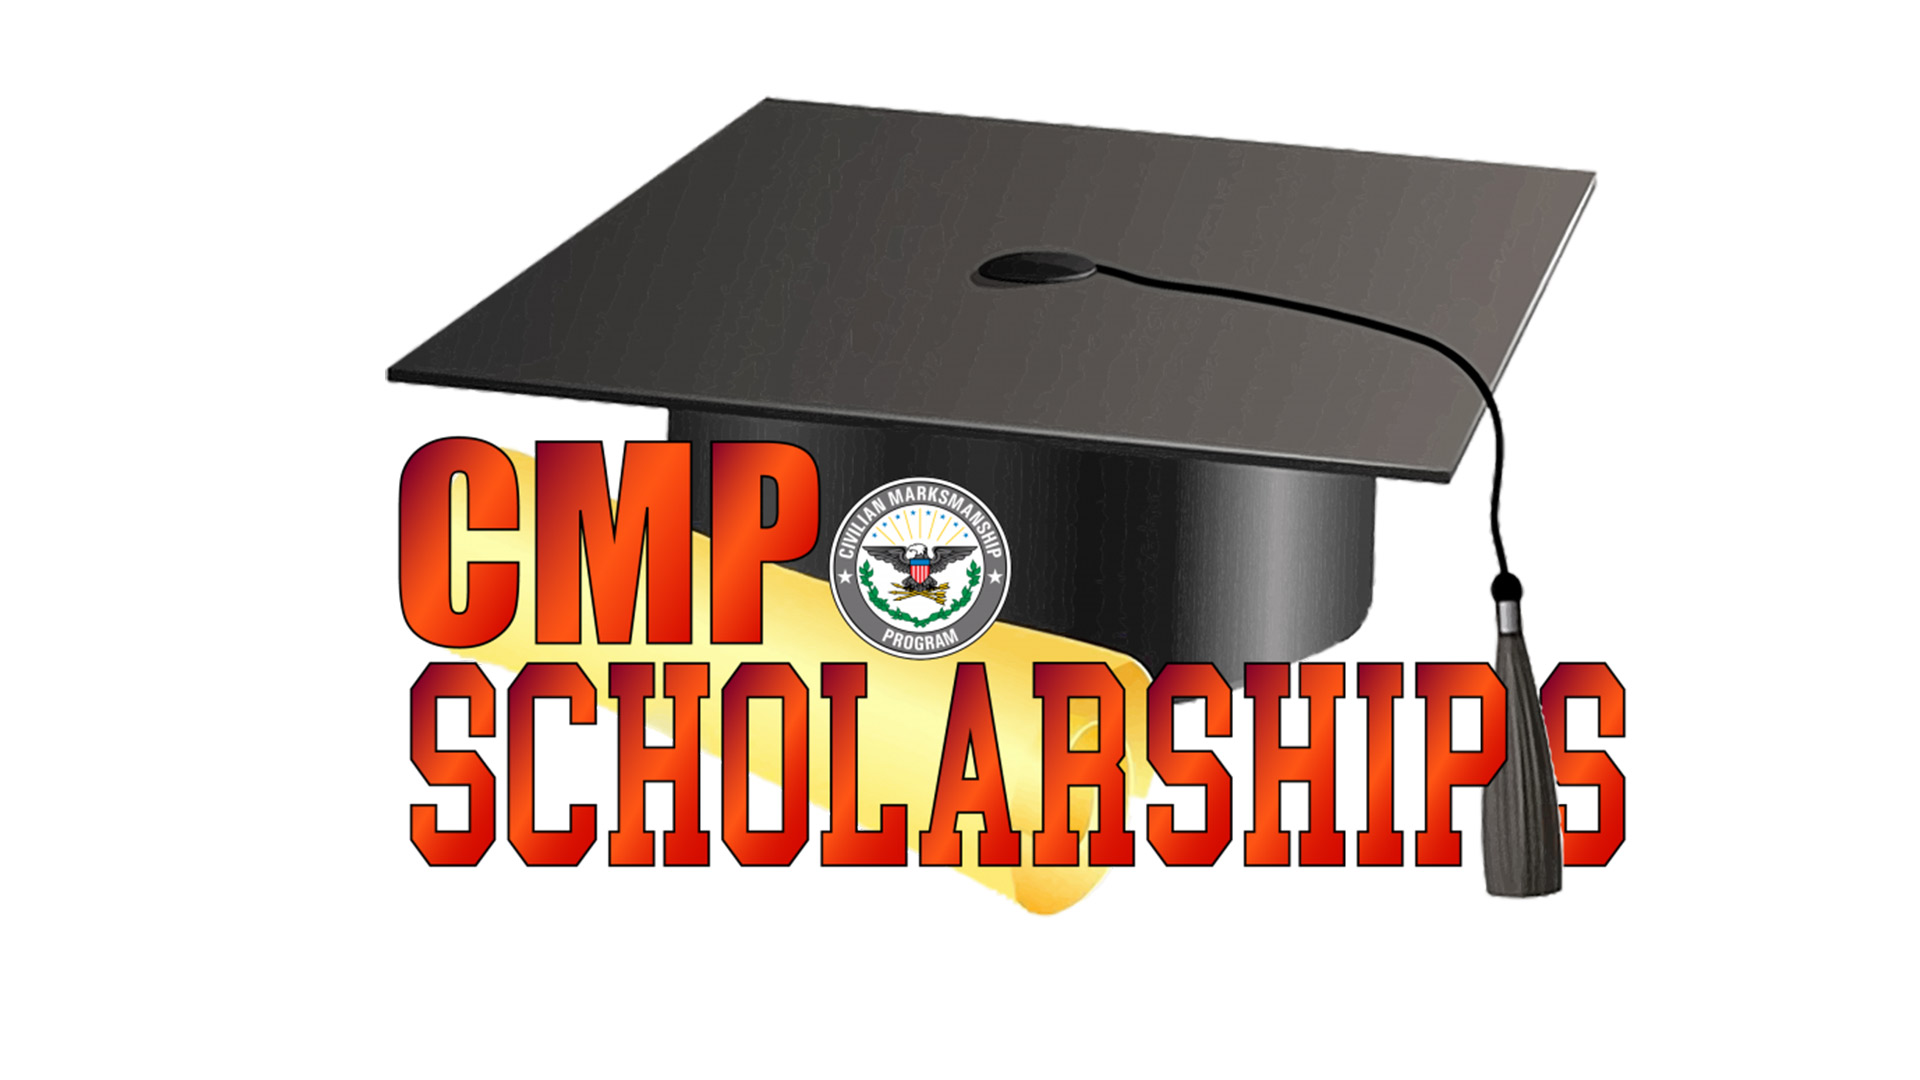 CMP Scholarships